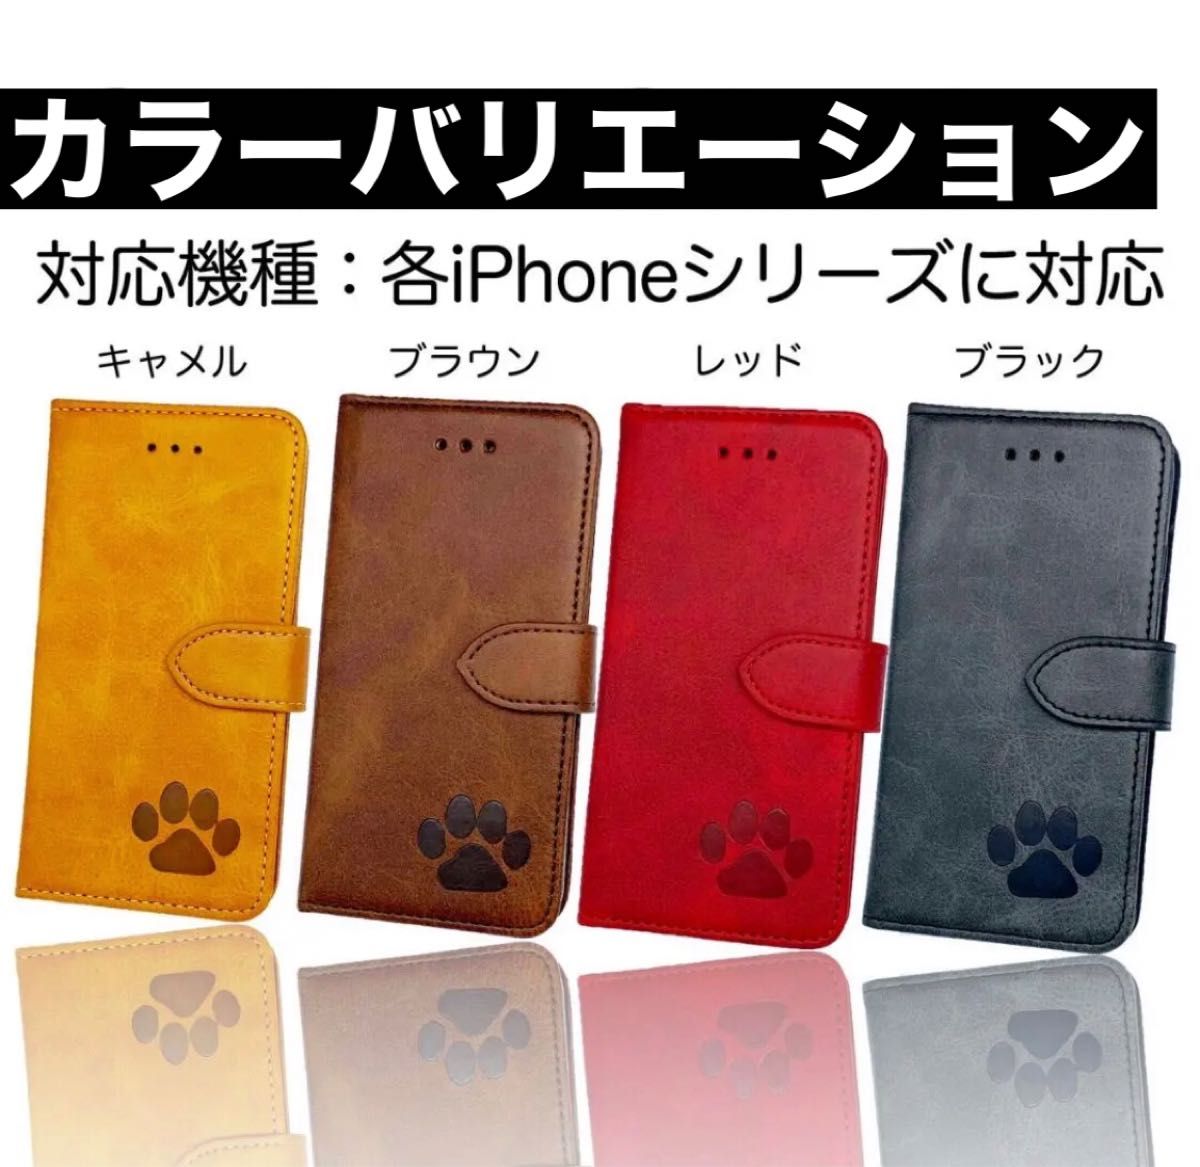 【iphoneSE3/SE2/7/8】肉球刻印スムース加工レザー手帳型ケース キャメル 新品未使用